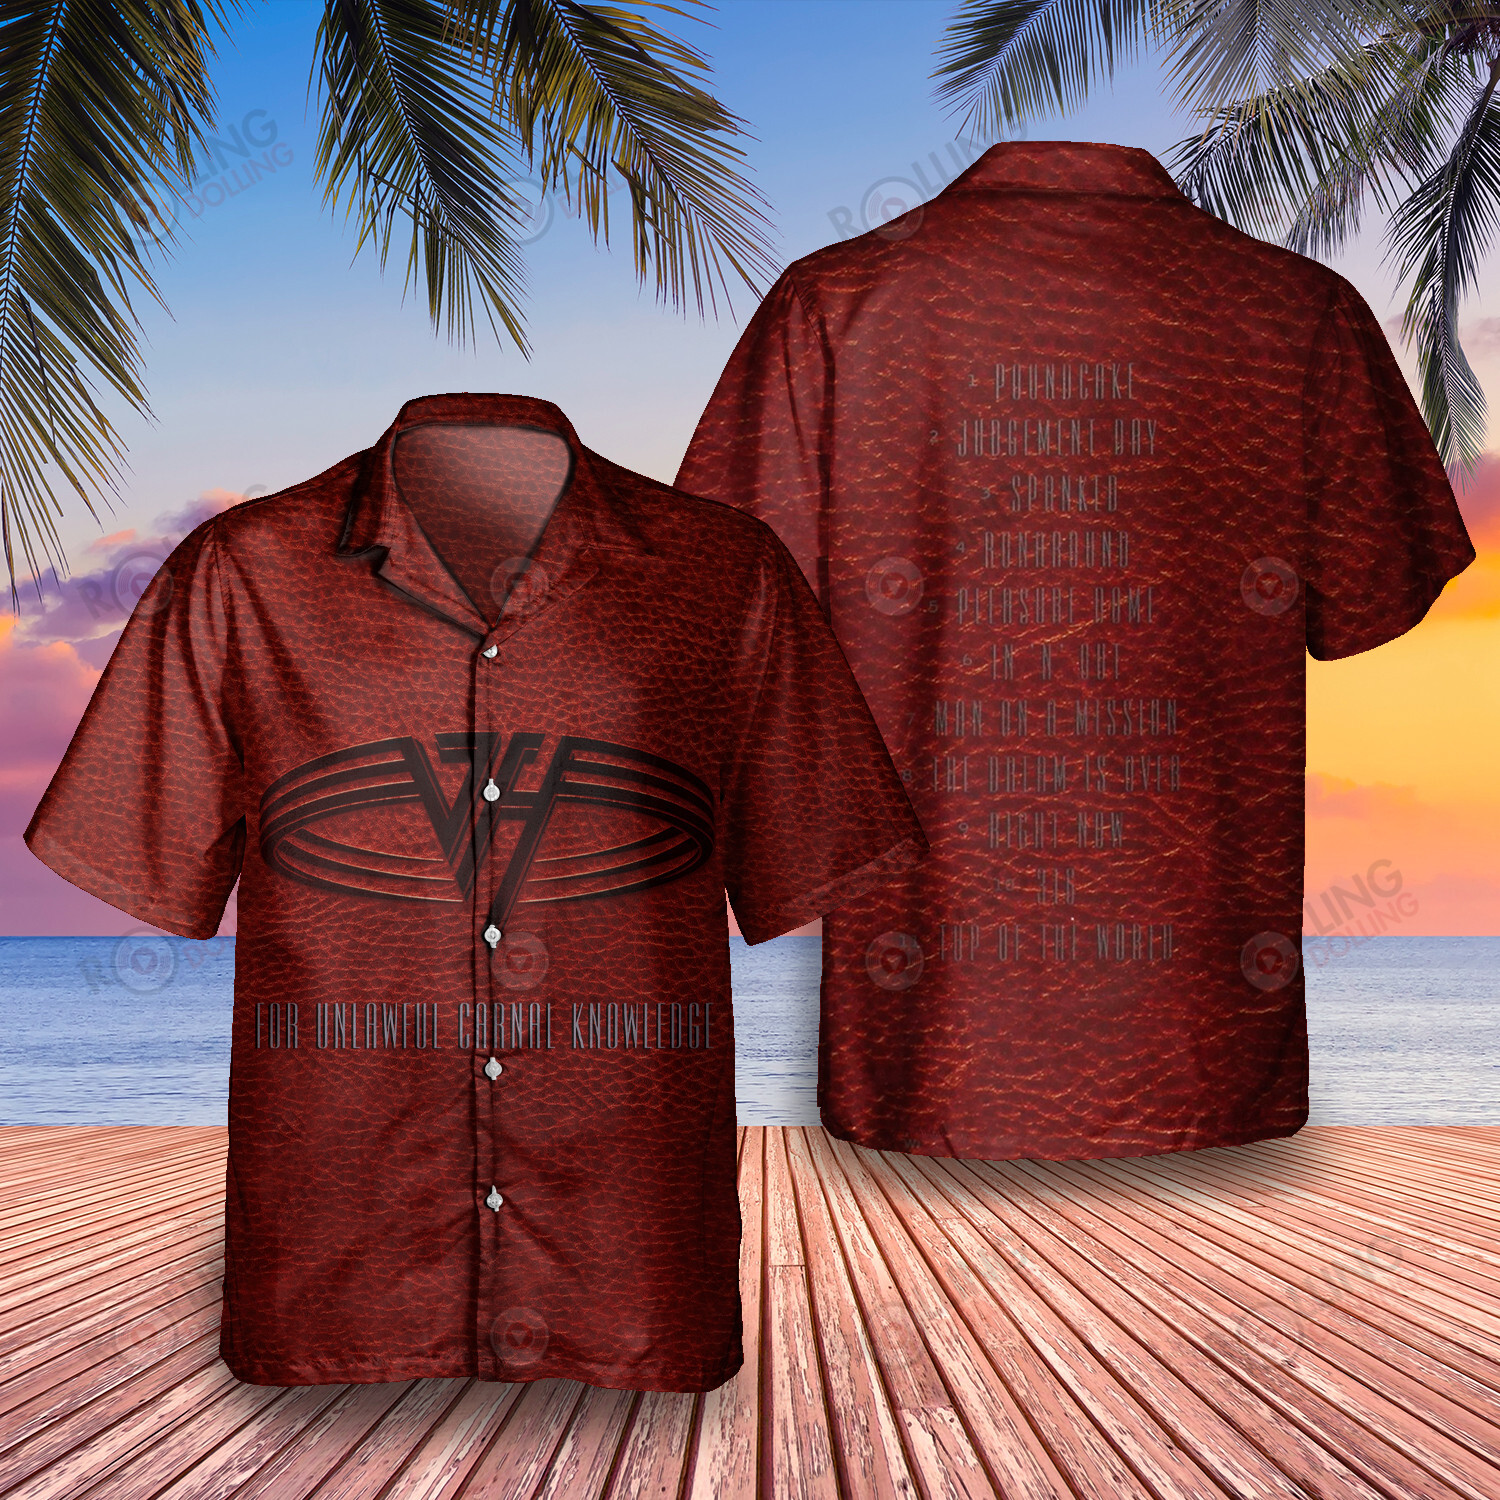 Regardless of their style, you will feel comfortable wearing Hawaiian Shirt 2